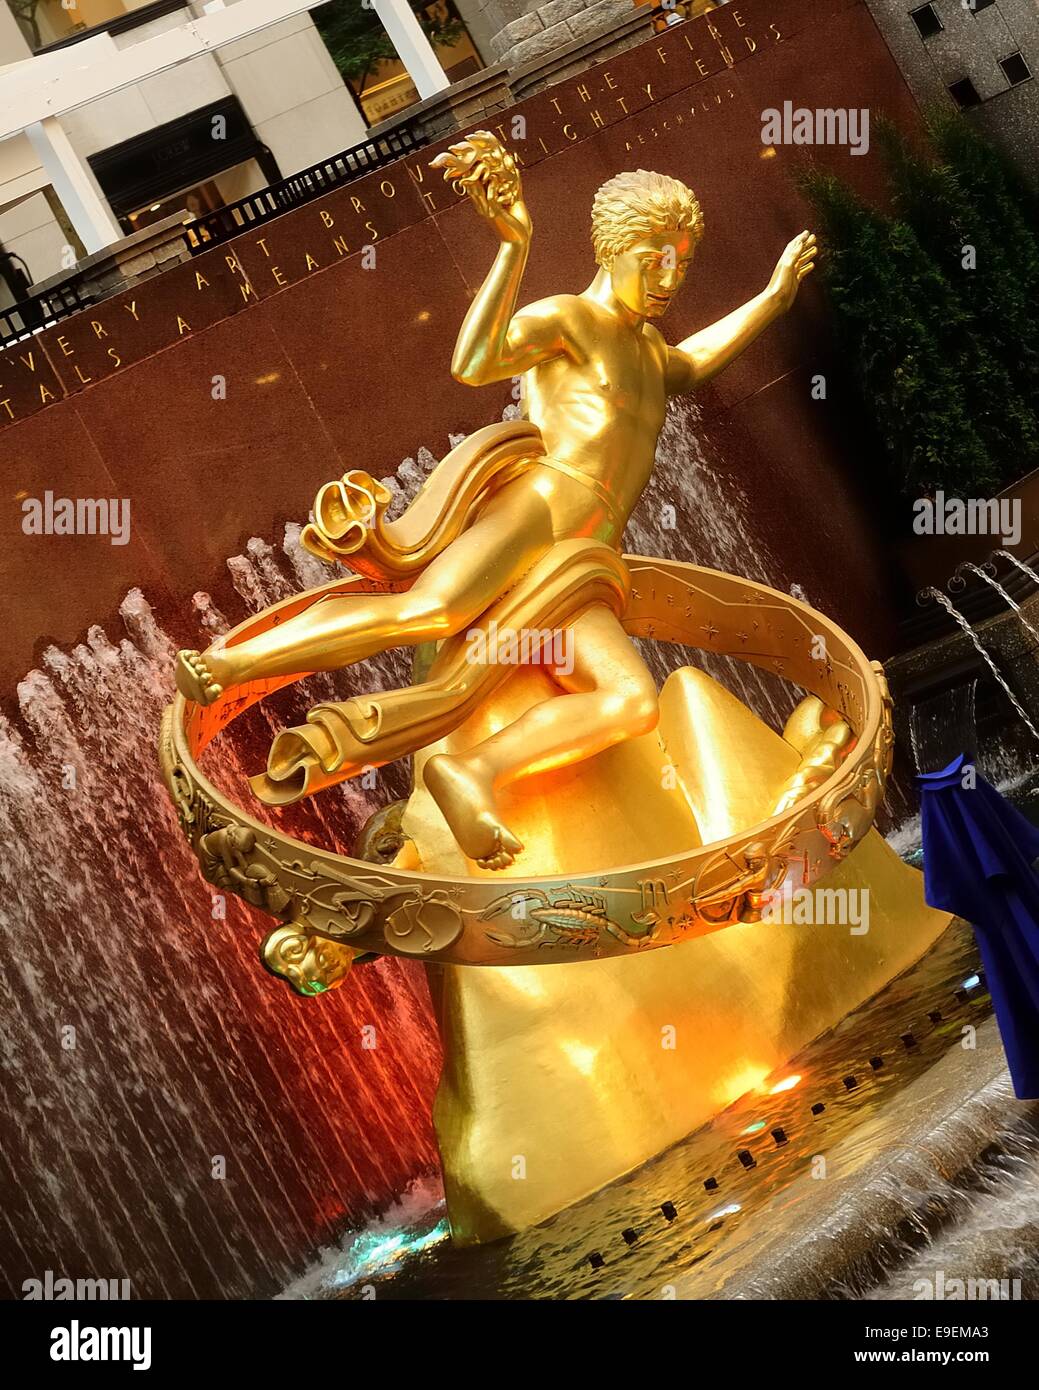 Prometheus sculpture at Rockefeller center in New York CIty Stock Photo